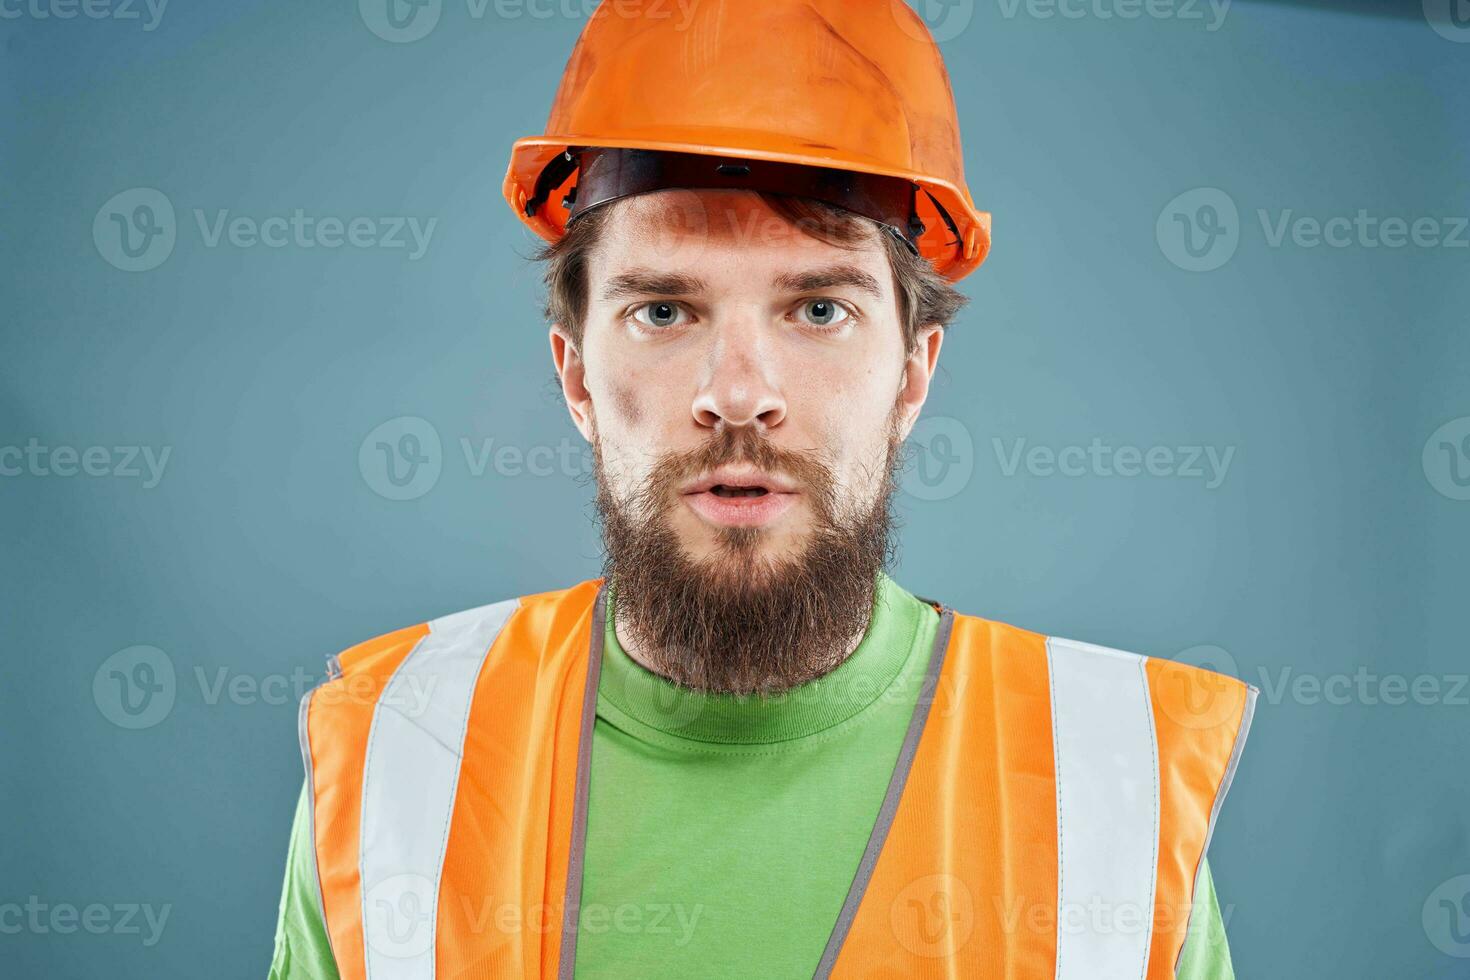 arbeider Mens bouw ingenieur uniform veiligheid bijgesneden visie foto